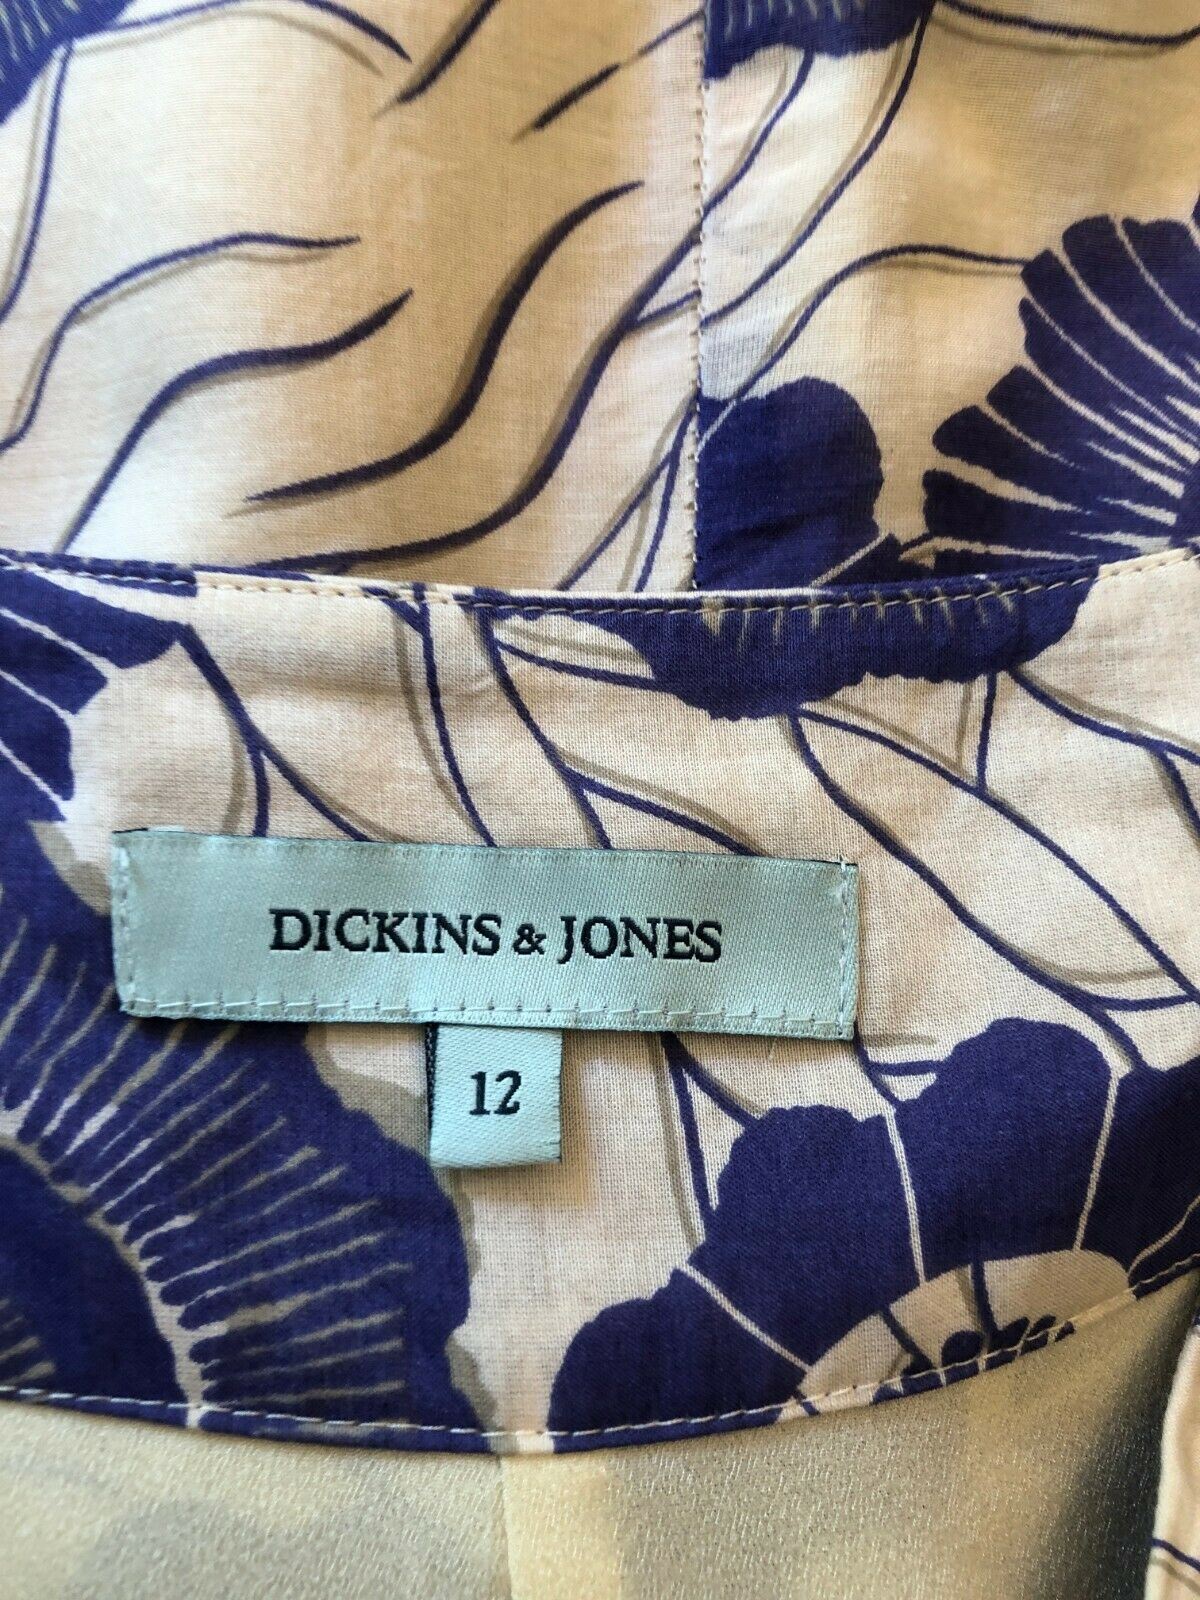 Dickins & Jones Purple & Ivory Cotton & Silk Skirt UK 12 US 8 EU 40 Timeless Fashions